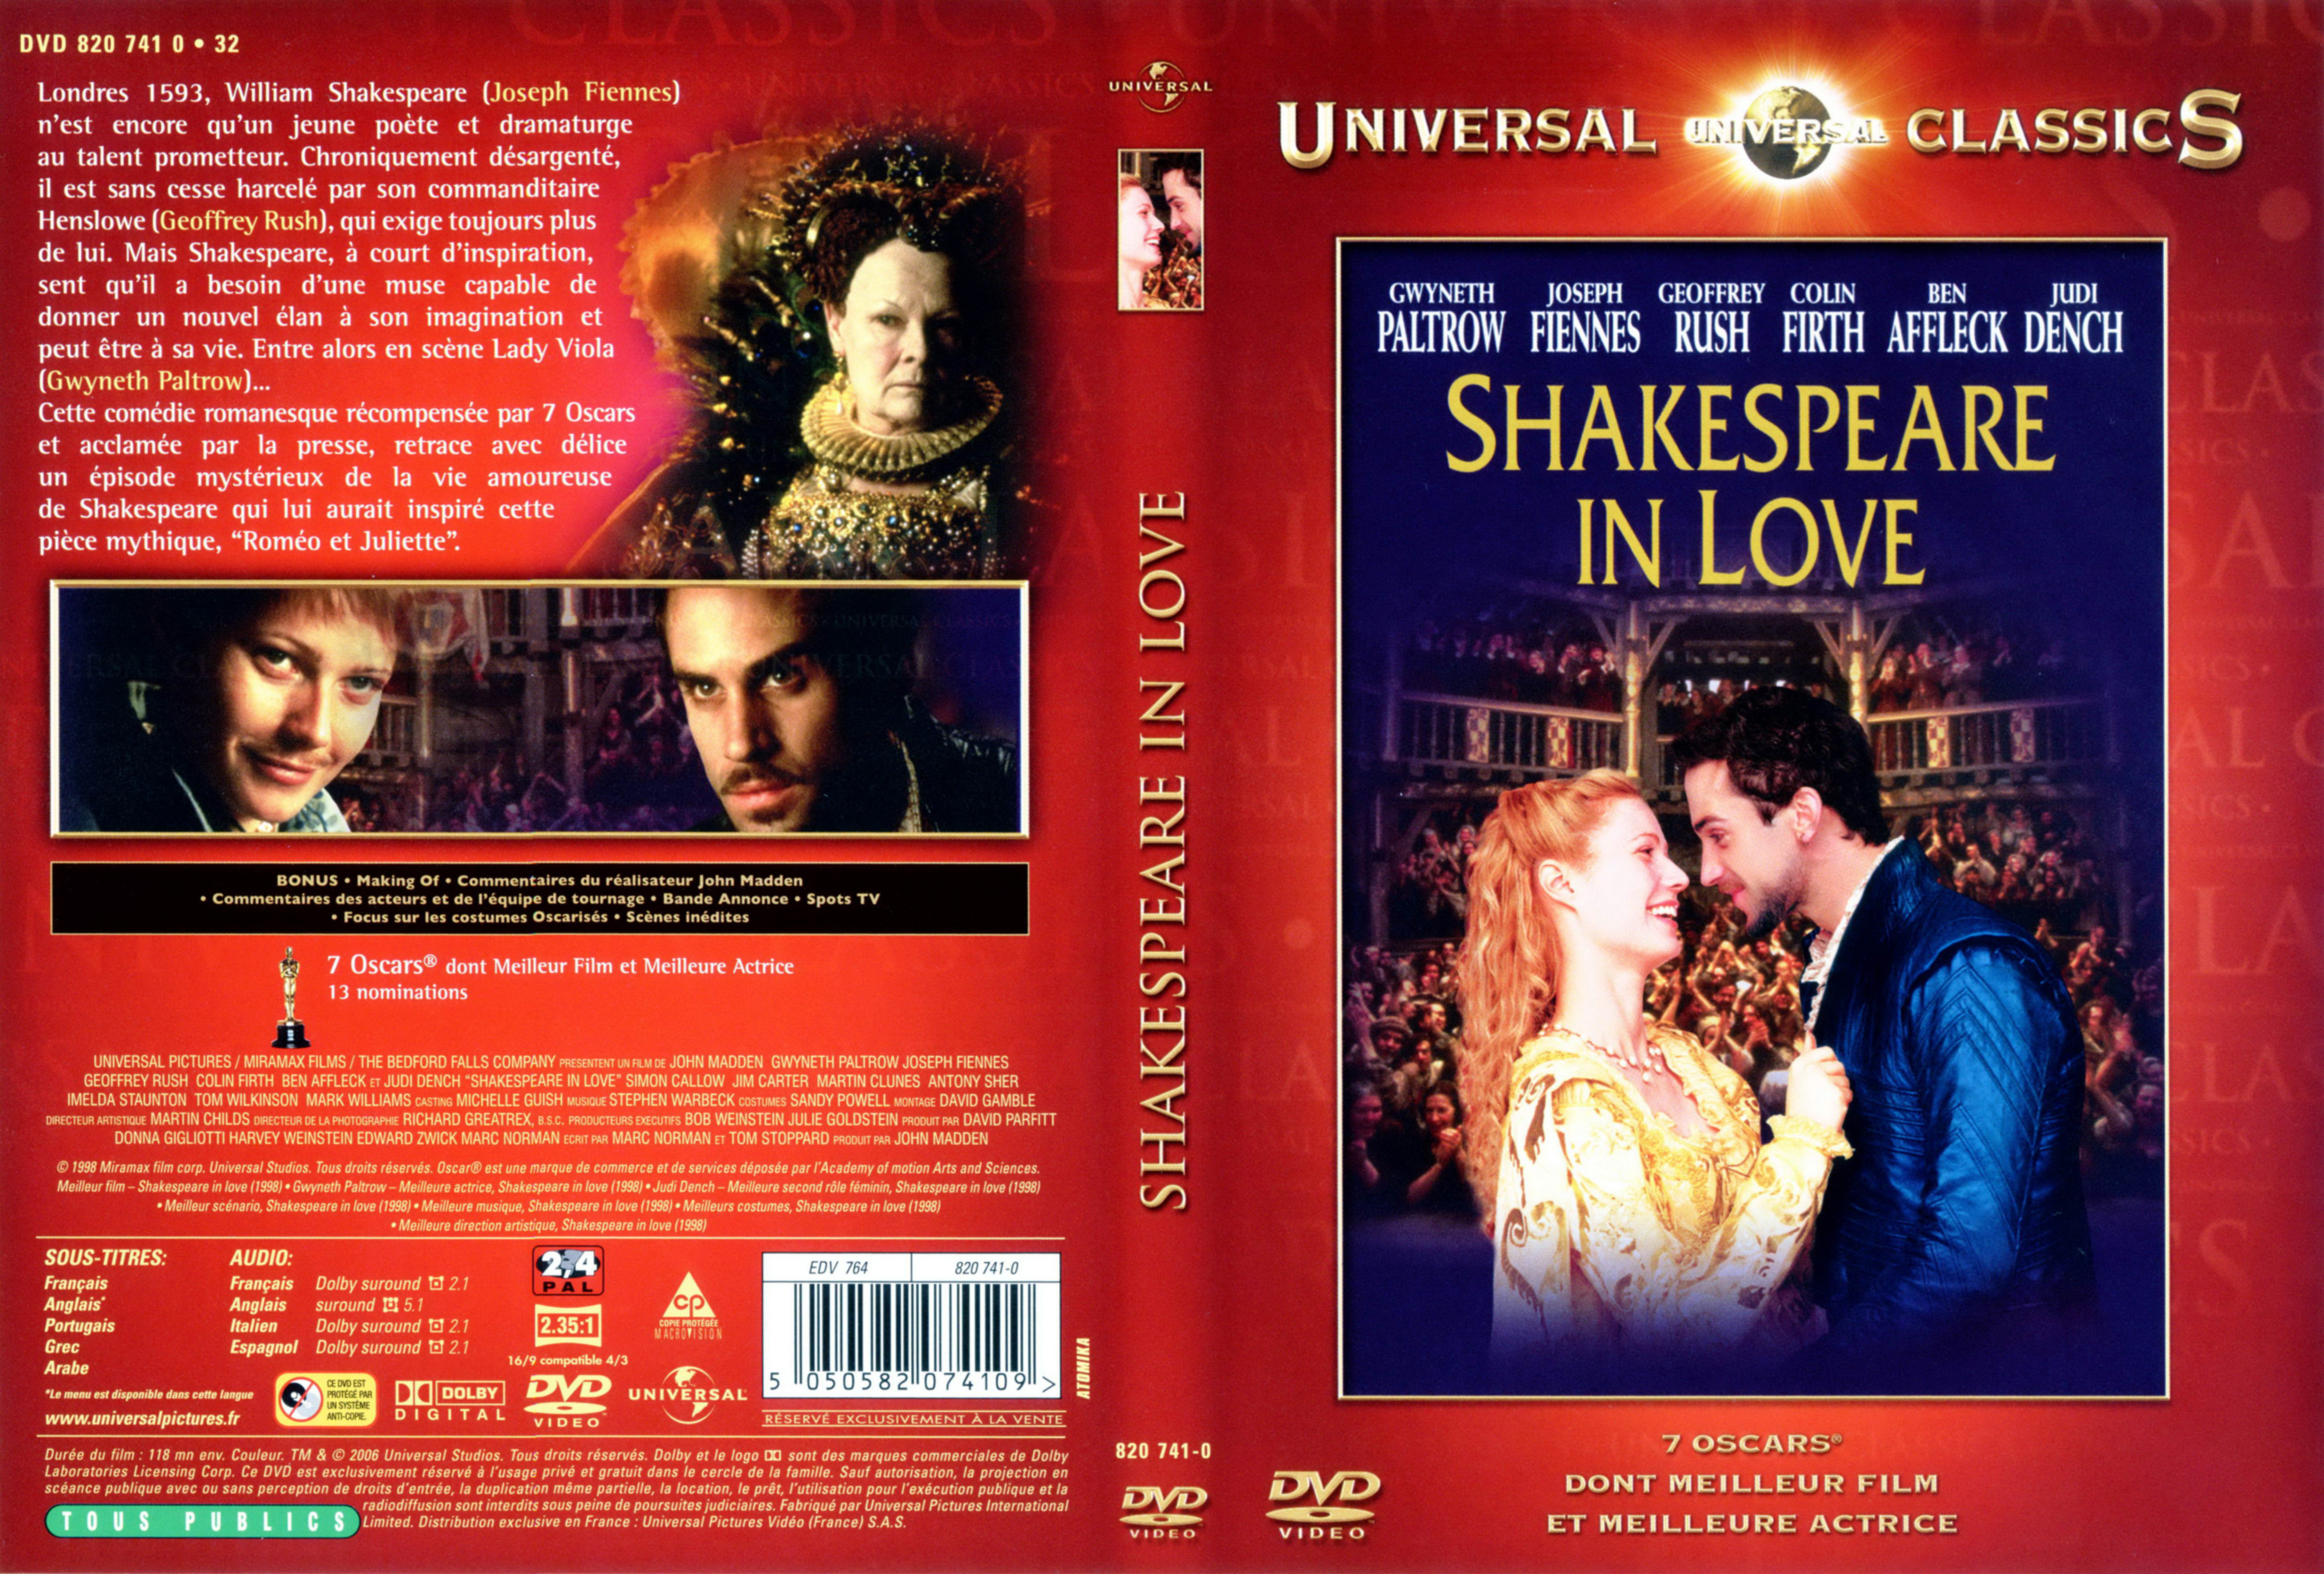 Jaquette DVD Shakespeare in love v2